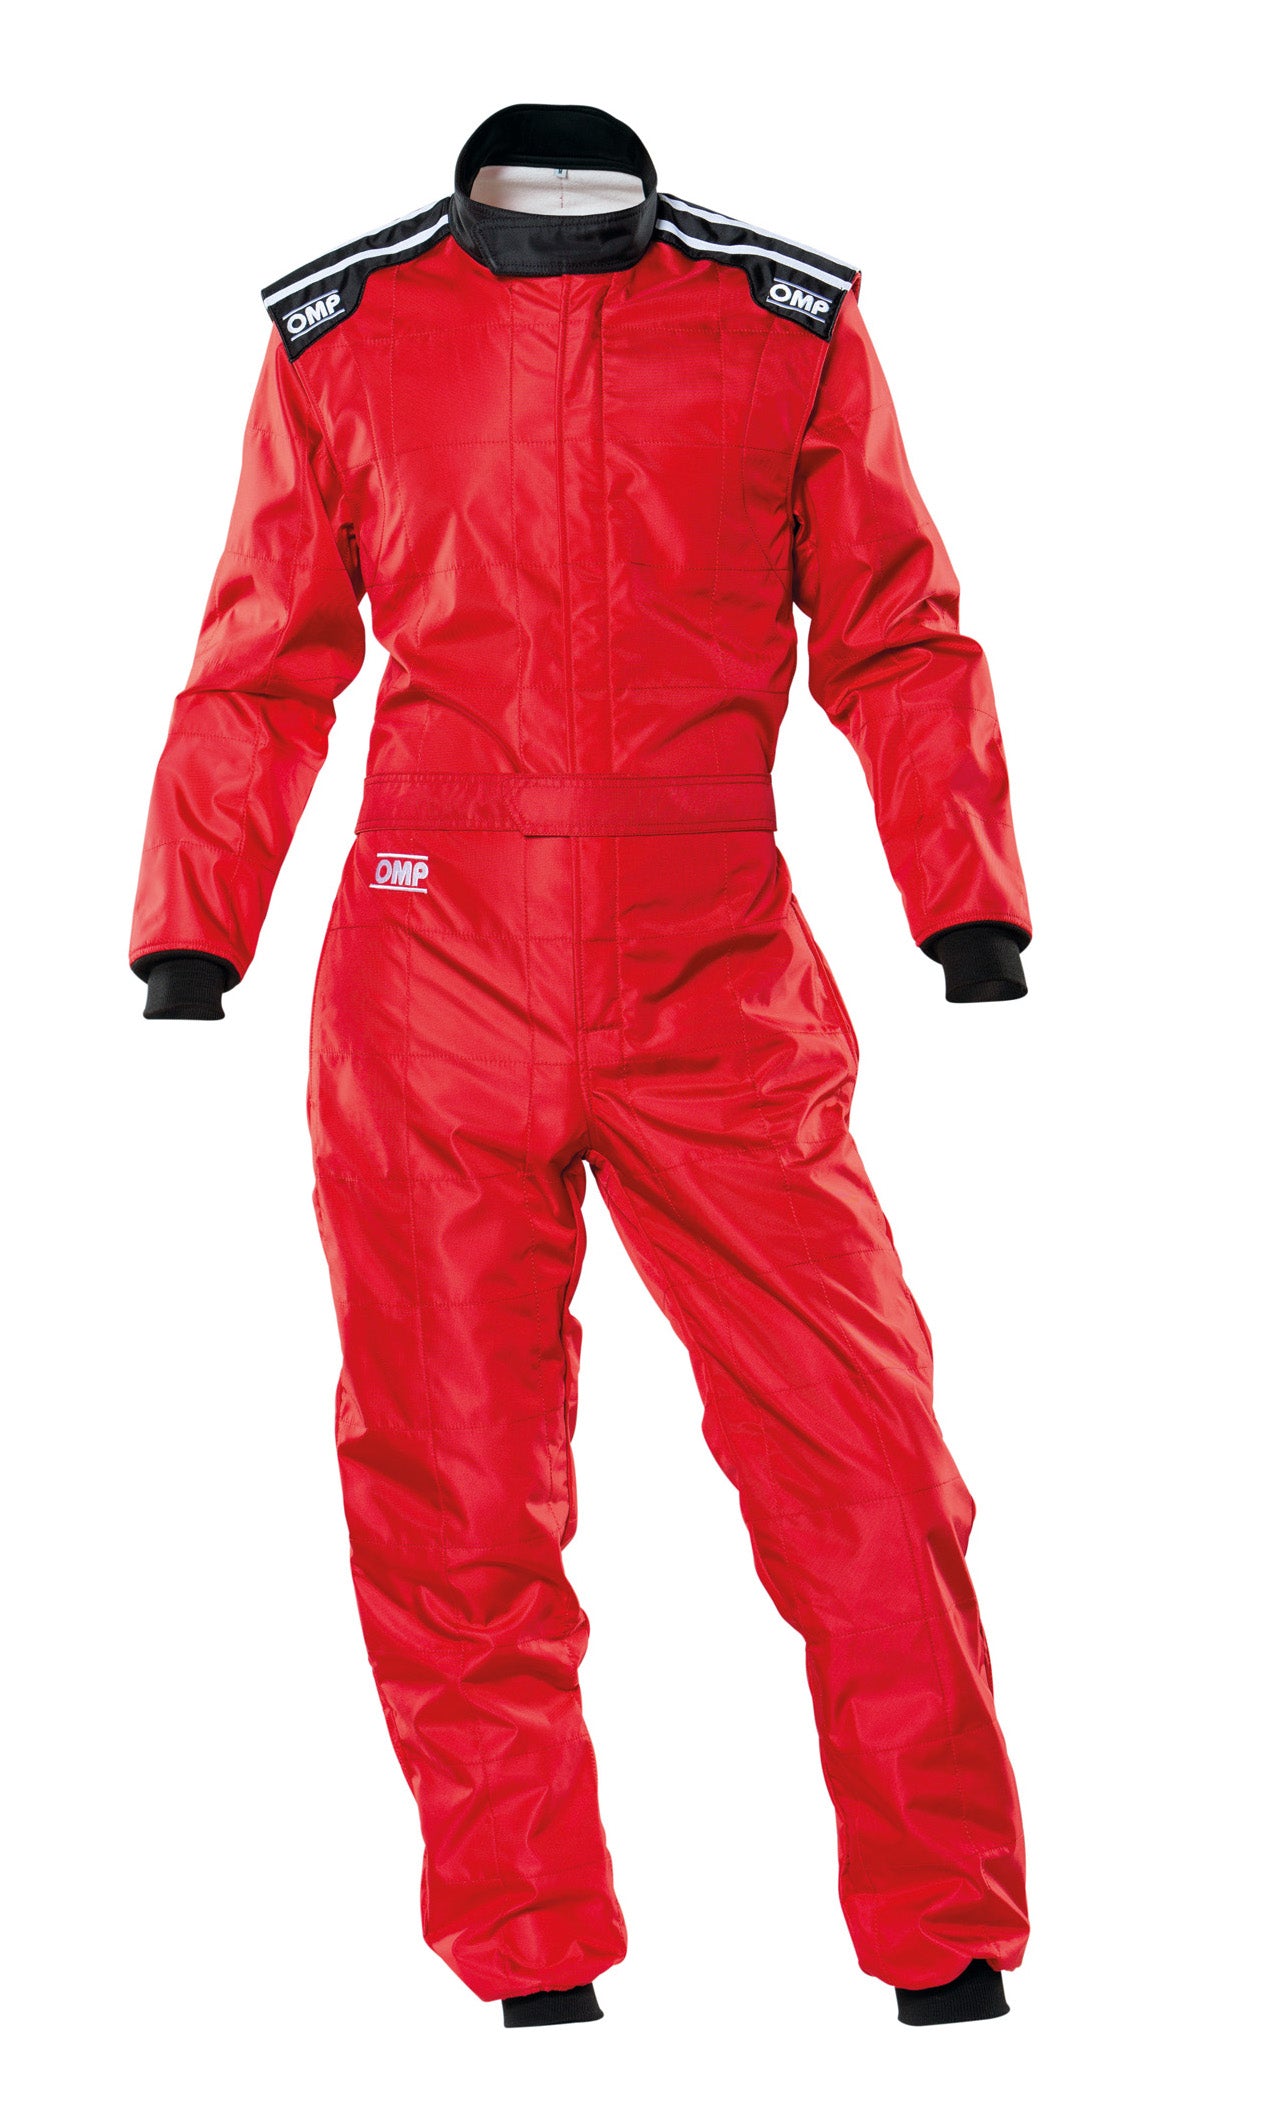 OMP KA0-1728-A01-061-XXL (KK01728061XXL) Karting suit KS-4 Suit my2021, CIK LEVEL 1, red, size XXL Photo-0 